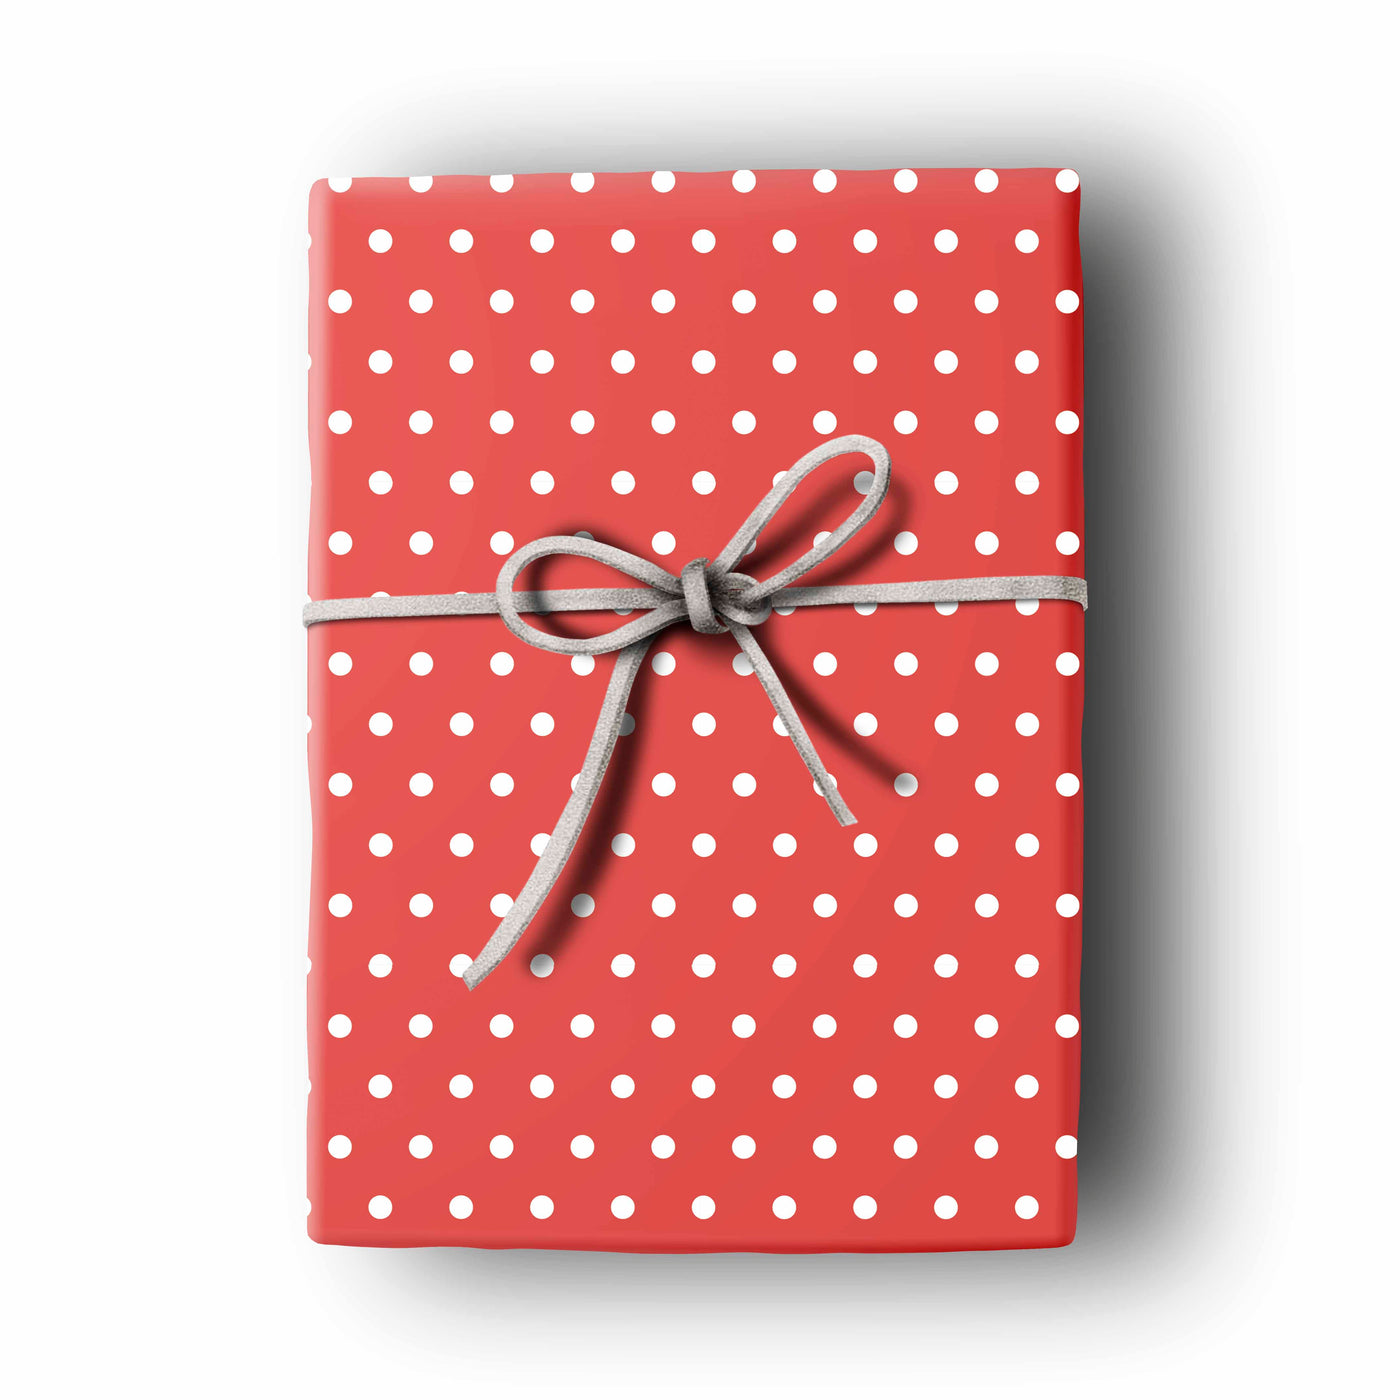 red polka dot gift wrap